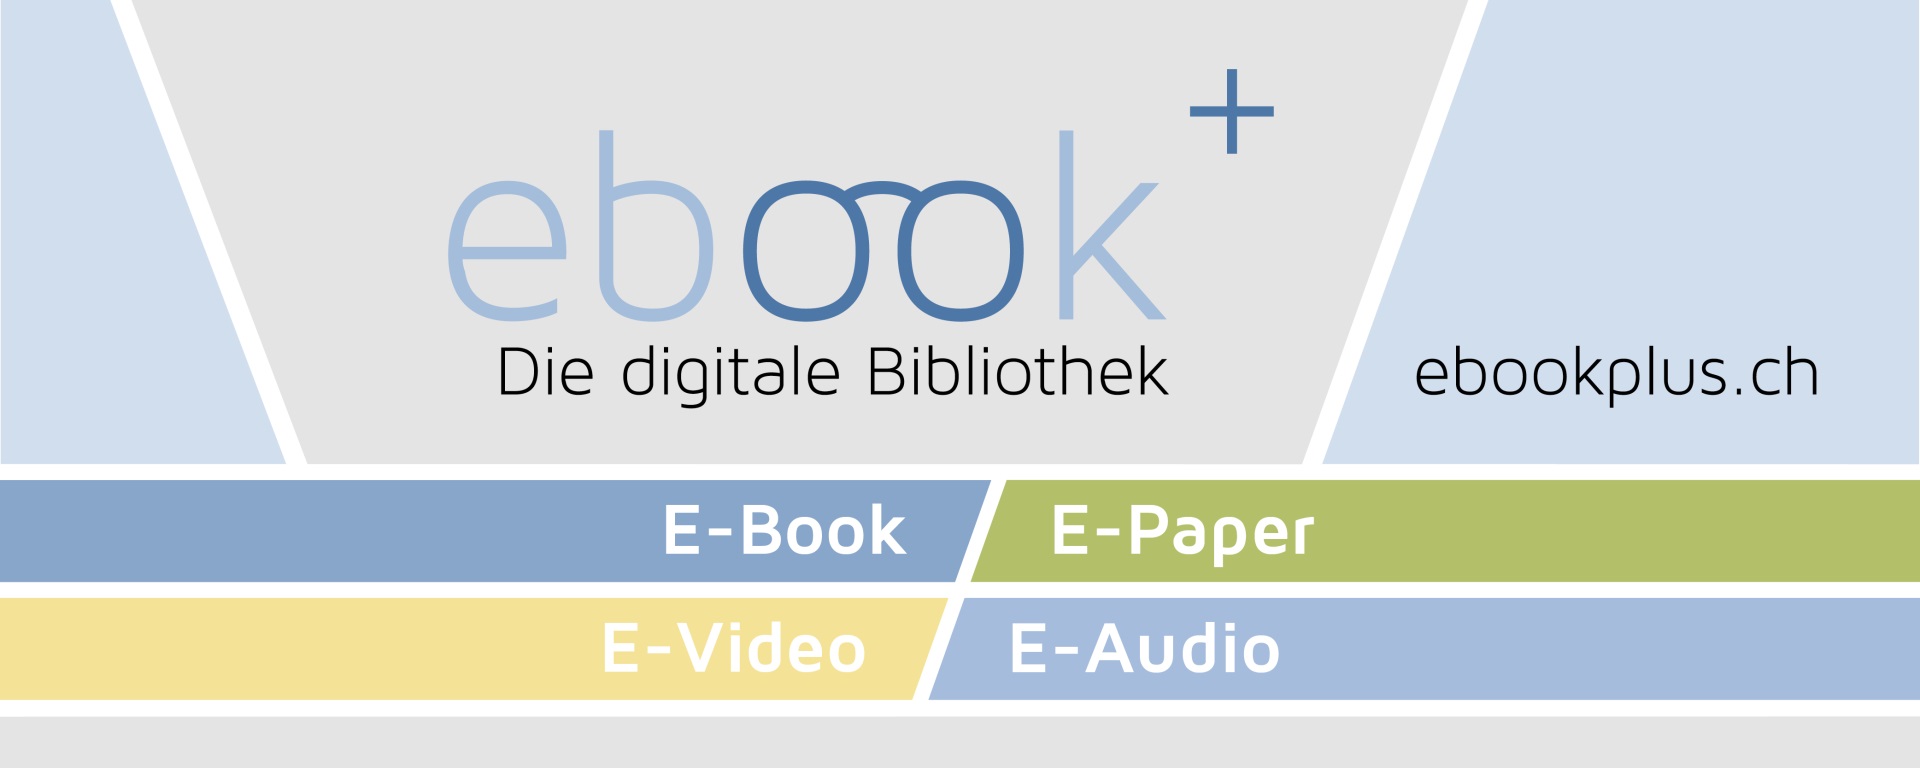 Symbolbild mit ebookplus-Logo